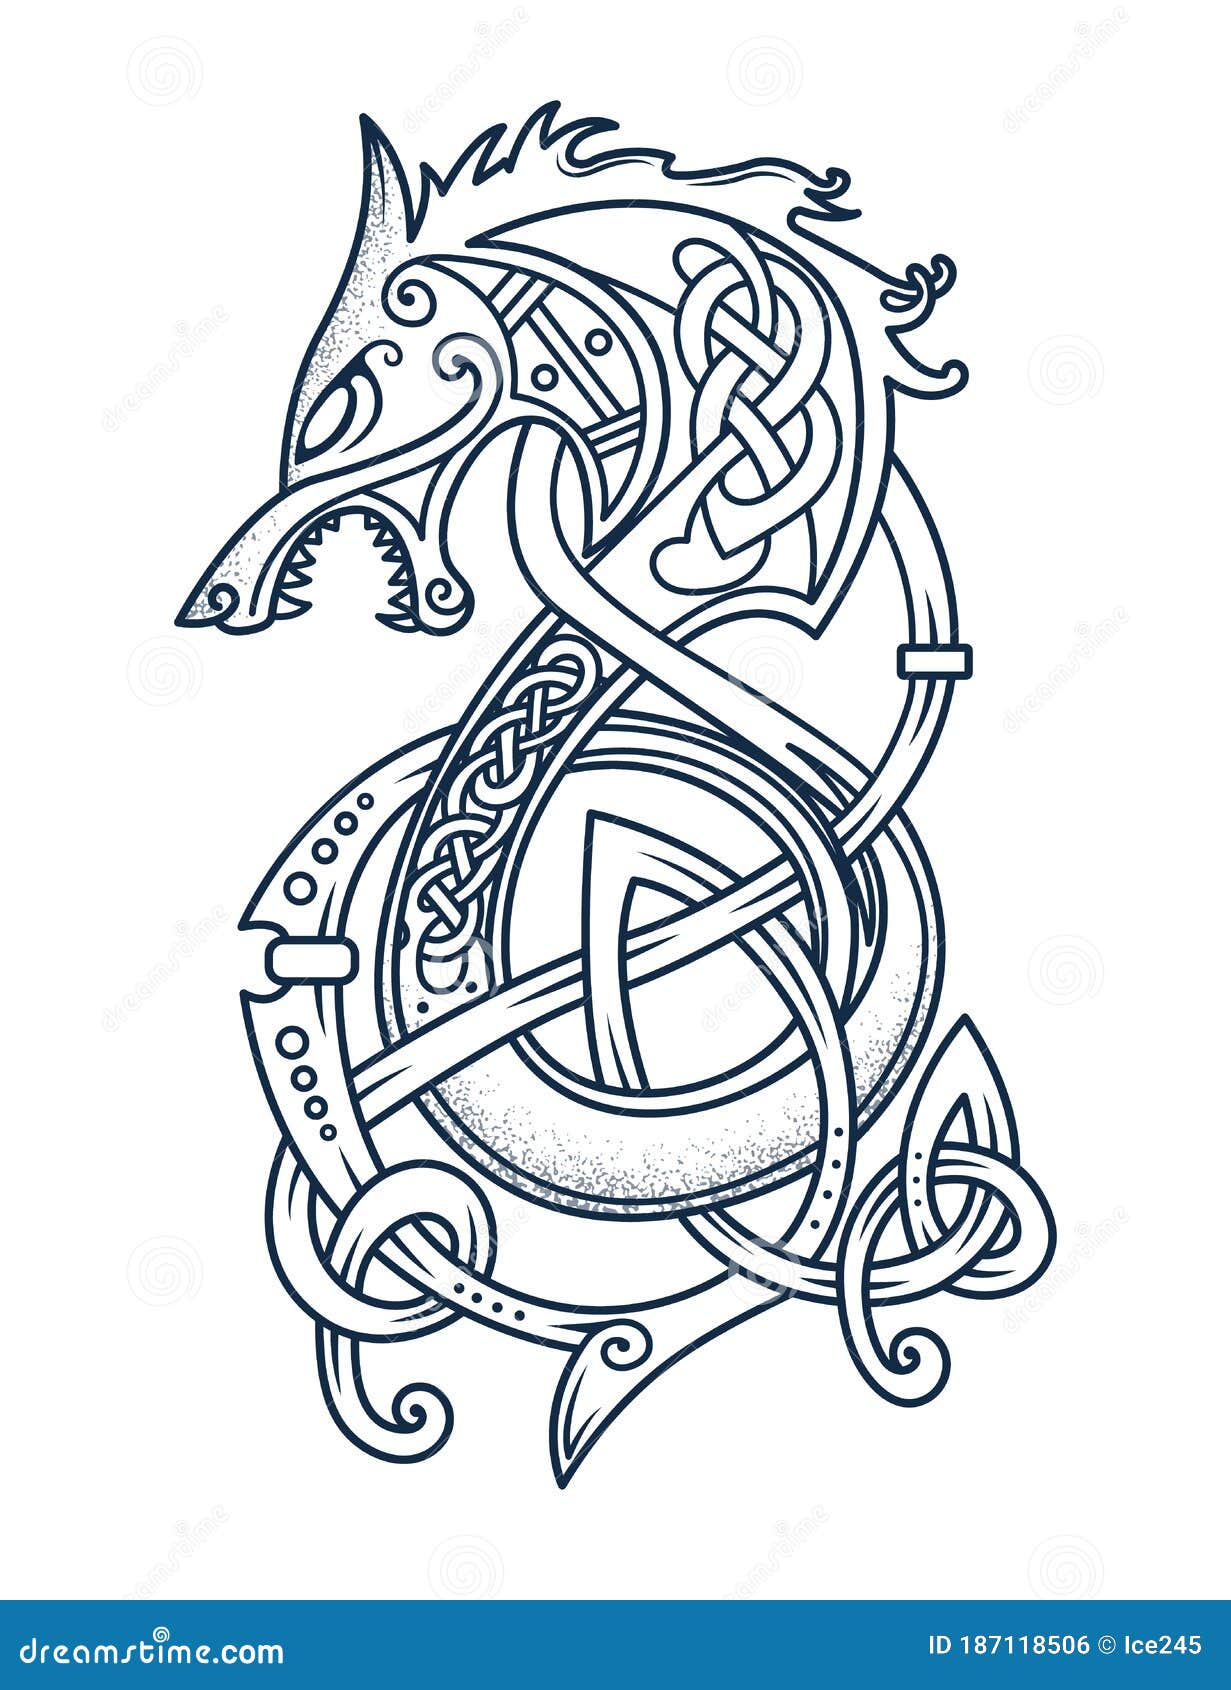 emblem of the brave viking warriors